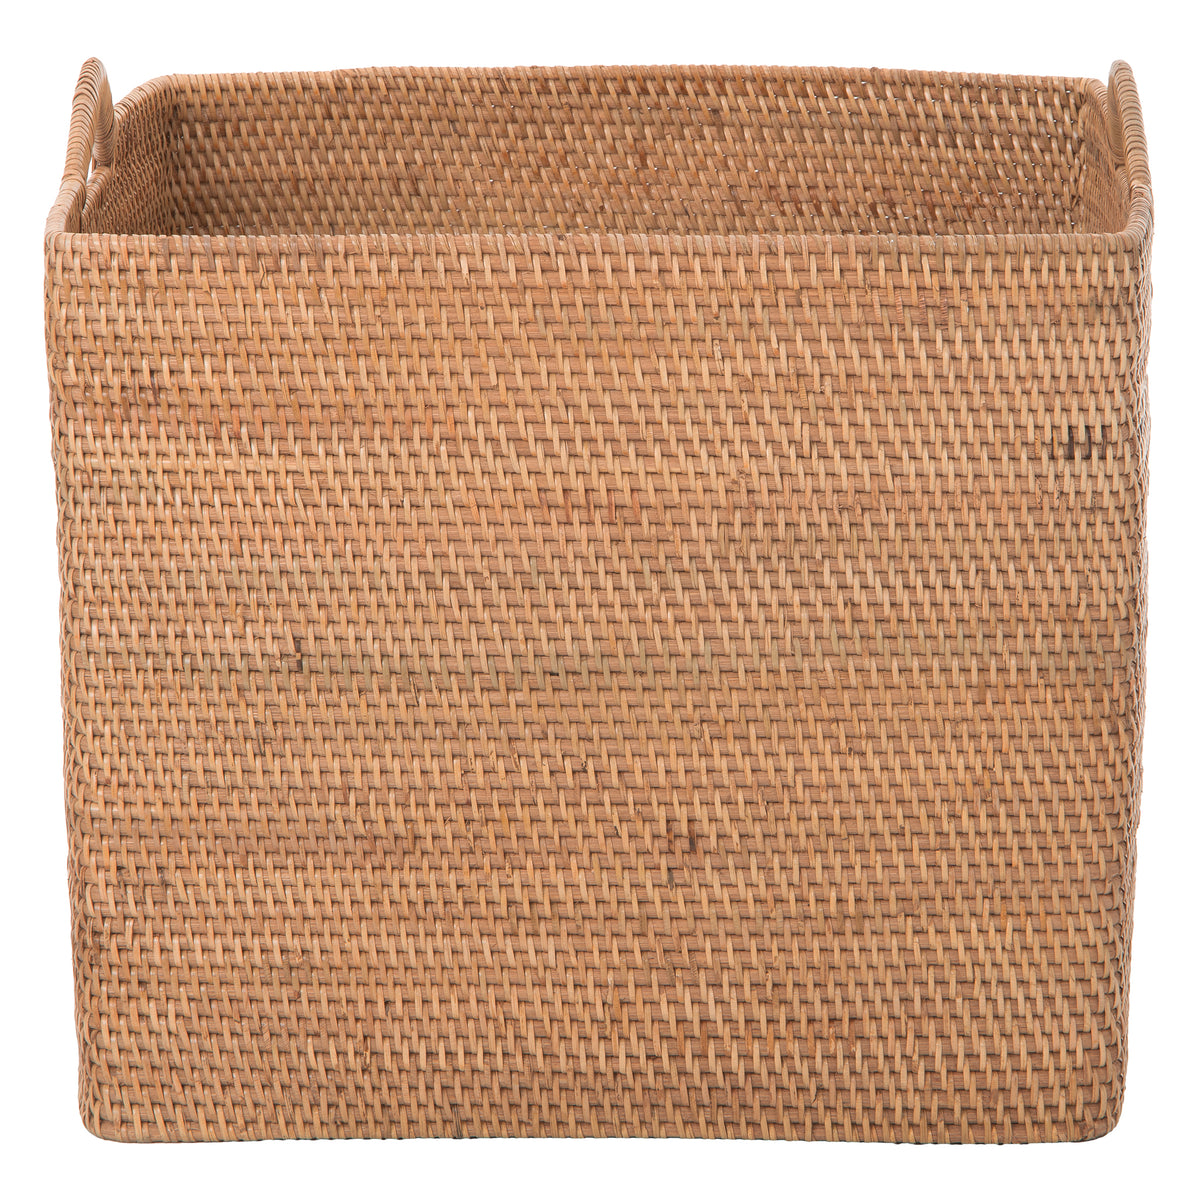 Loma Rectangular Decorative Rattan Storage Basket with Ear Handles, Large